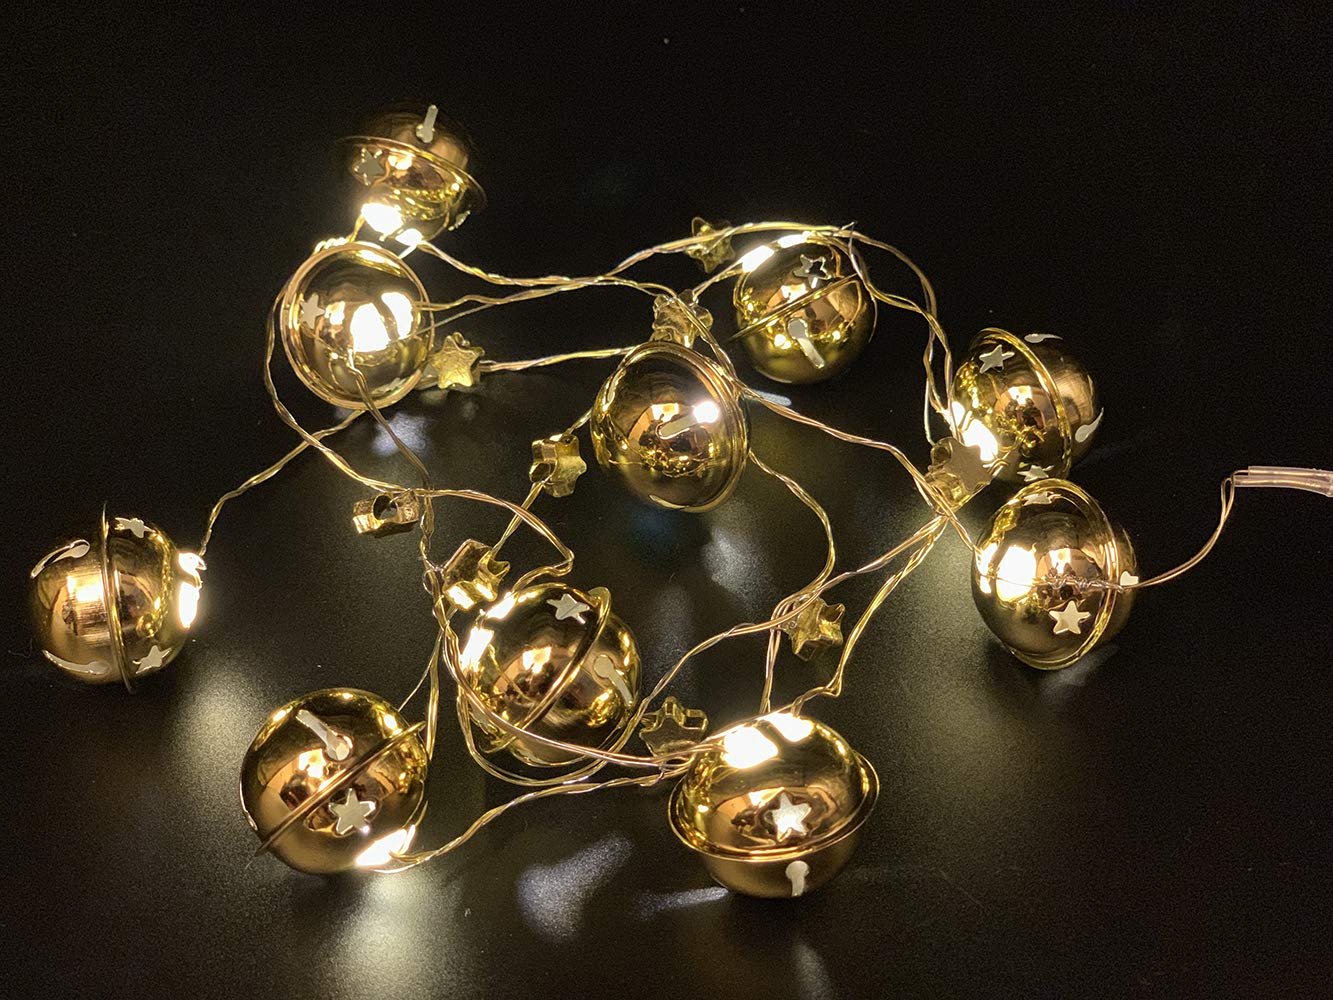 10er LED Sternen Lichterkette Keramik Timer Batterie Deko Weihnachts Beleuchtung